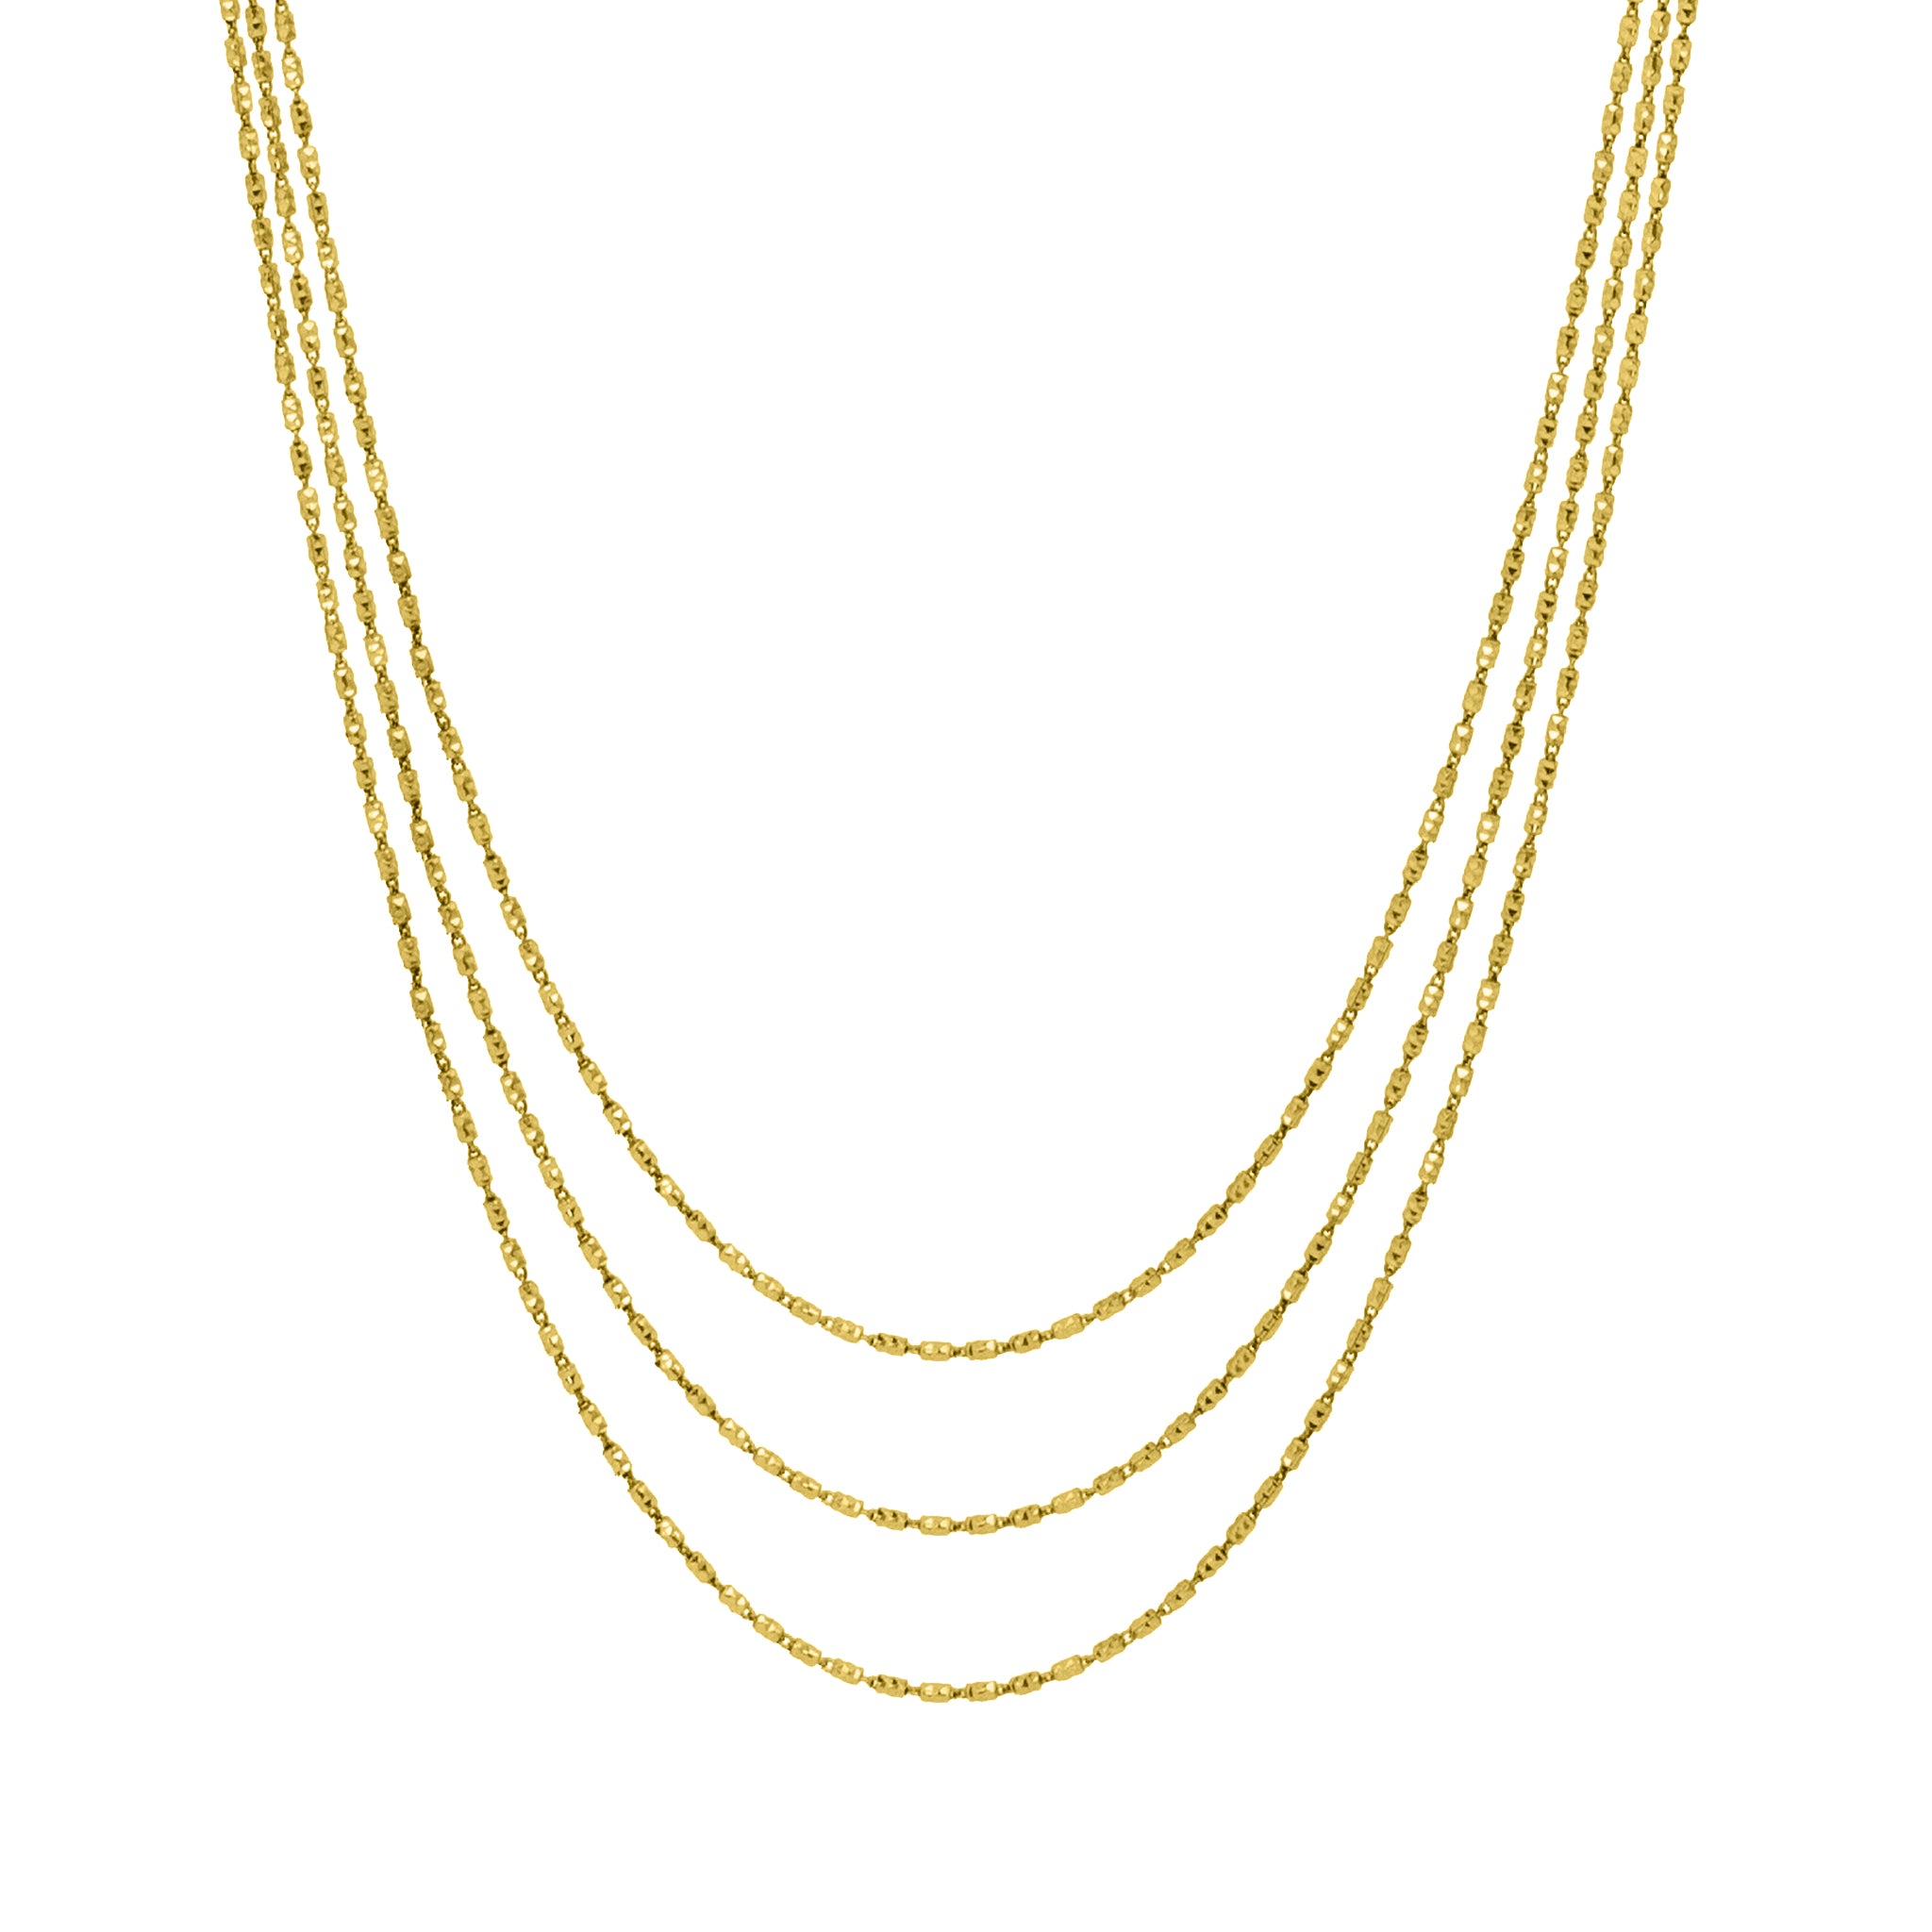 Gold NYC chain Bundle